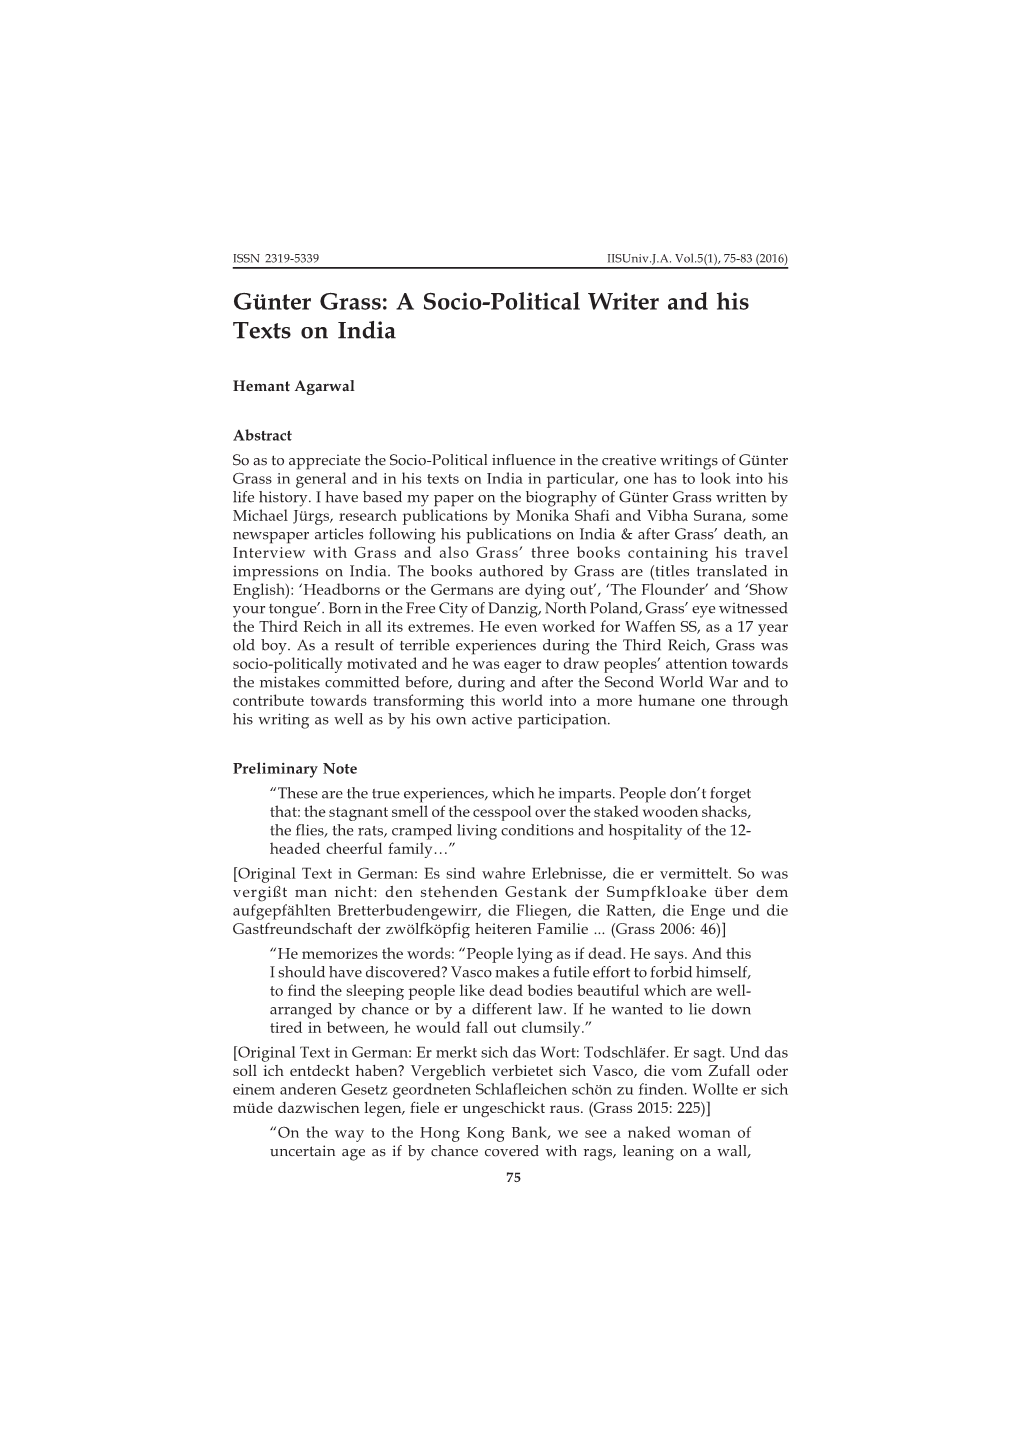 Günter Grass: a Socio-Political Writer and His Texts on India